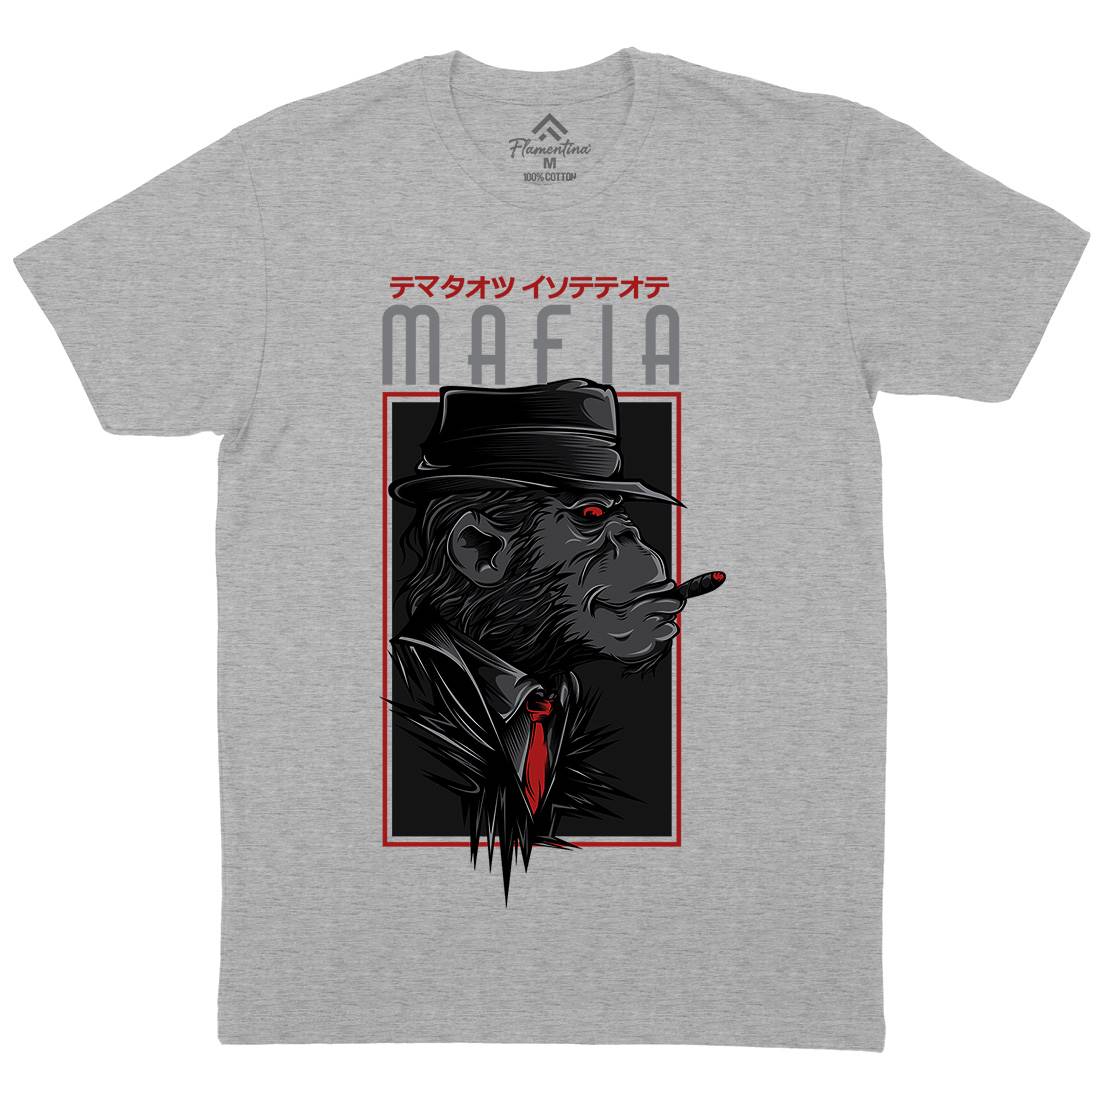 Mafia Monkey Mens Crew Neck T-Shirt Animals D642